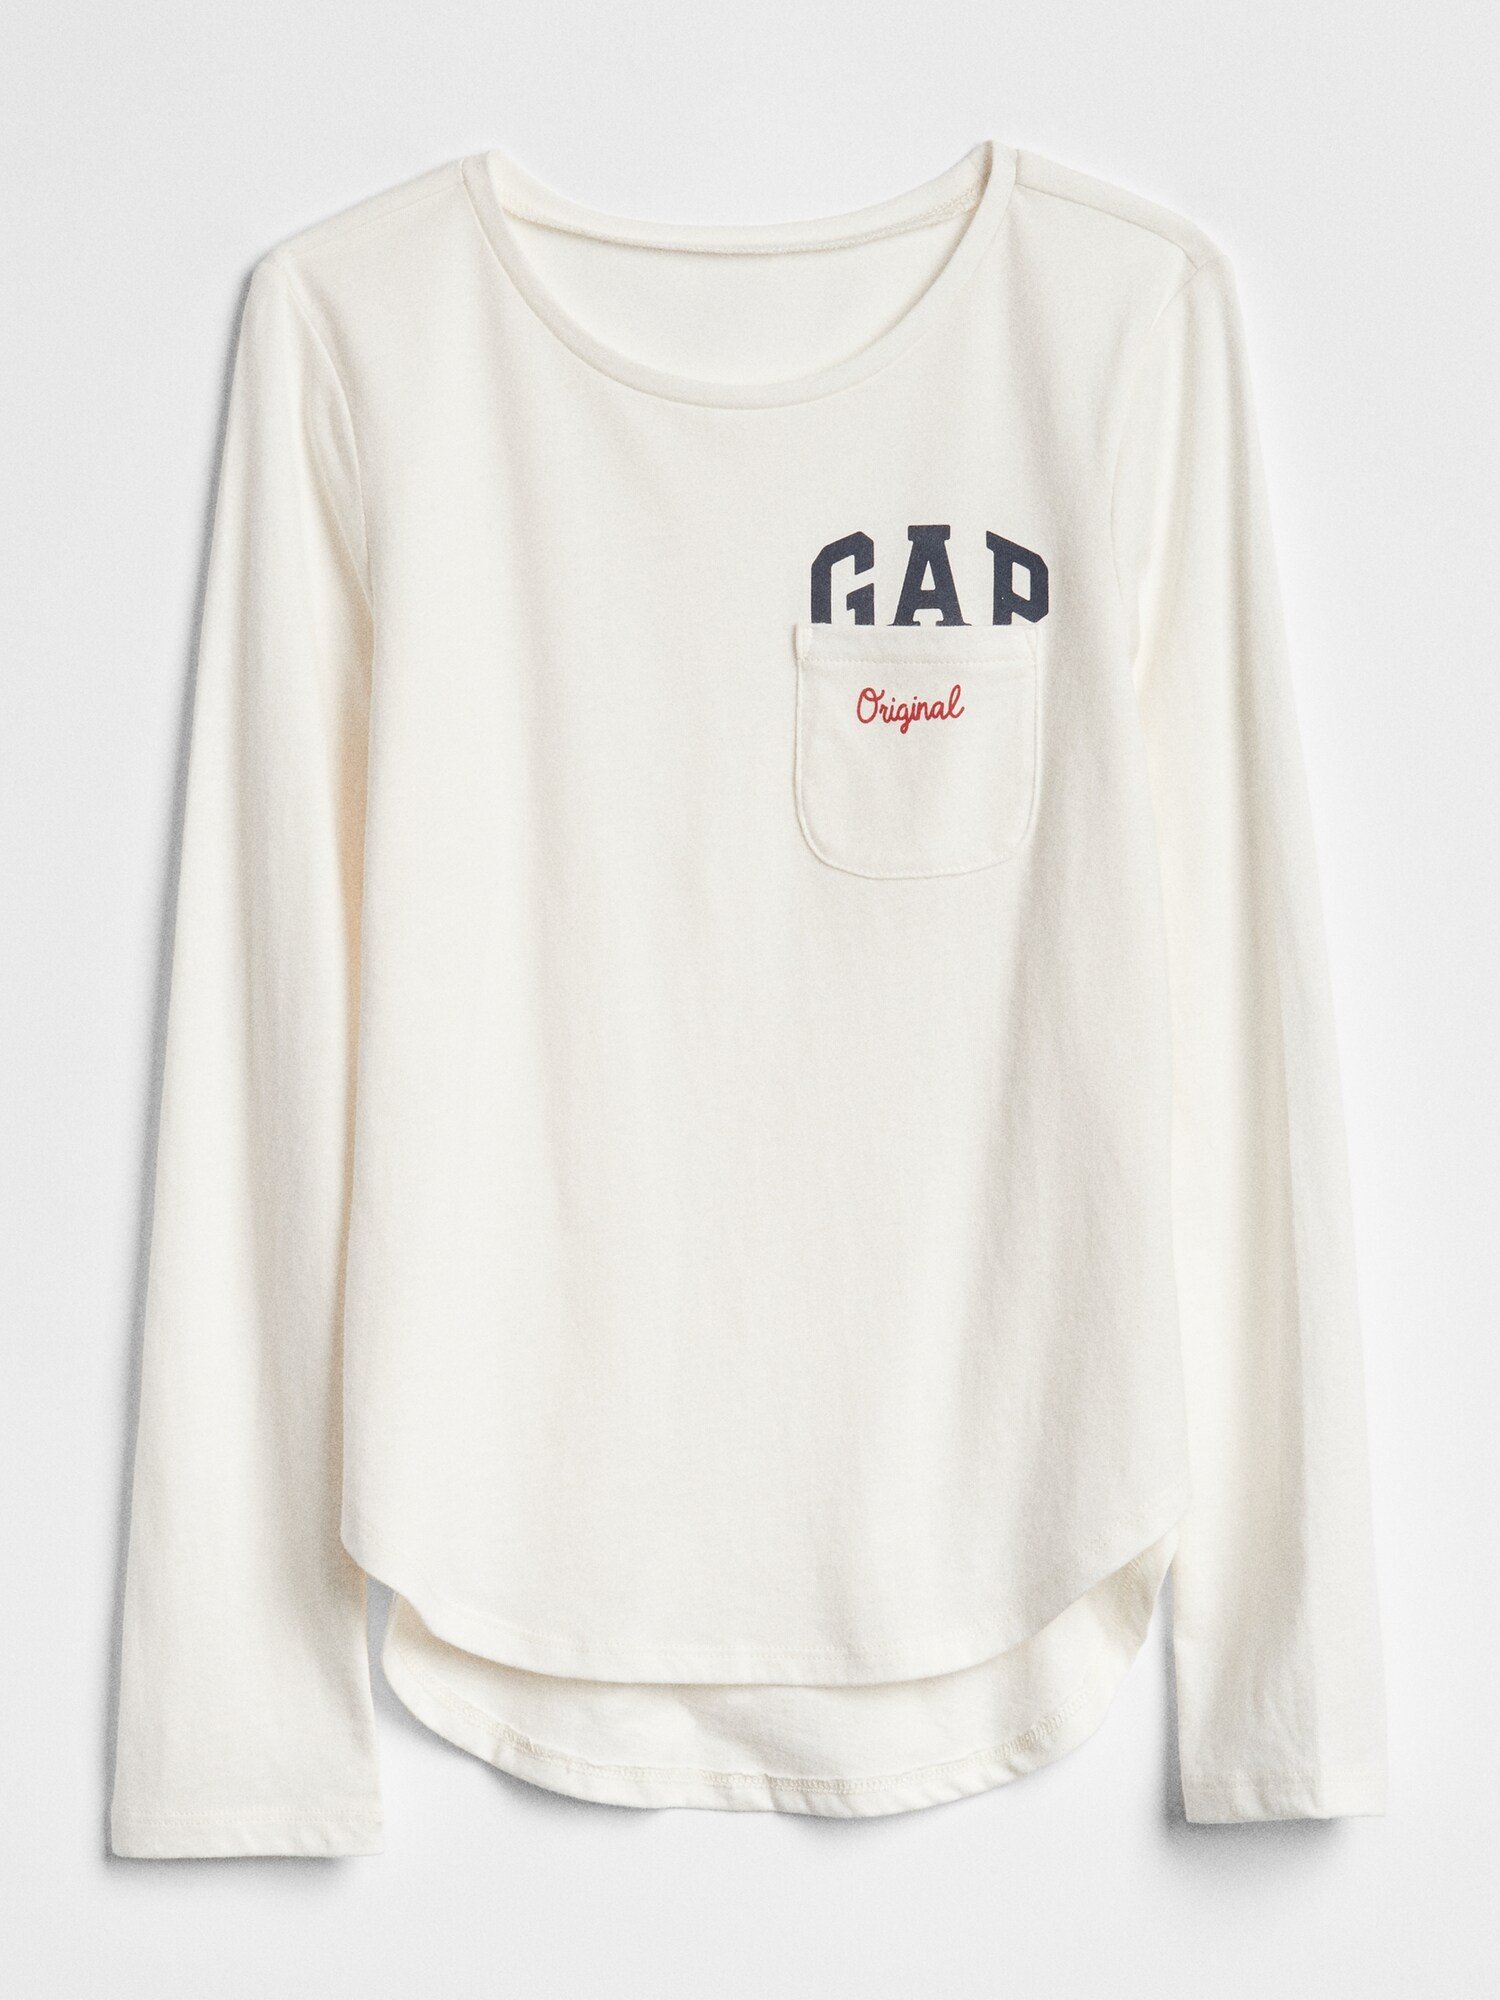 Kız Çocuk Gap Logo Uzun Kollu T-Shirt product image